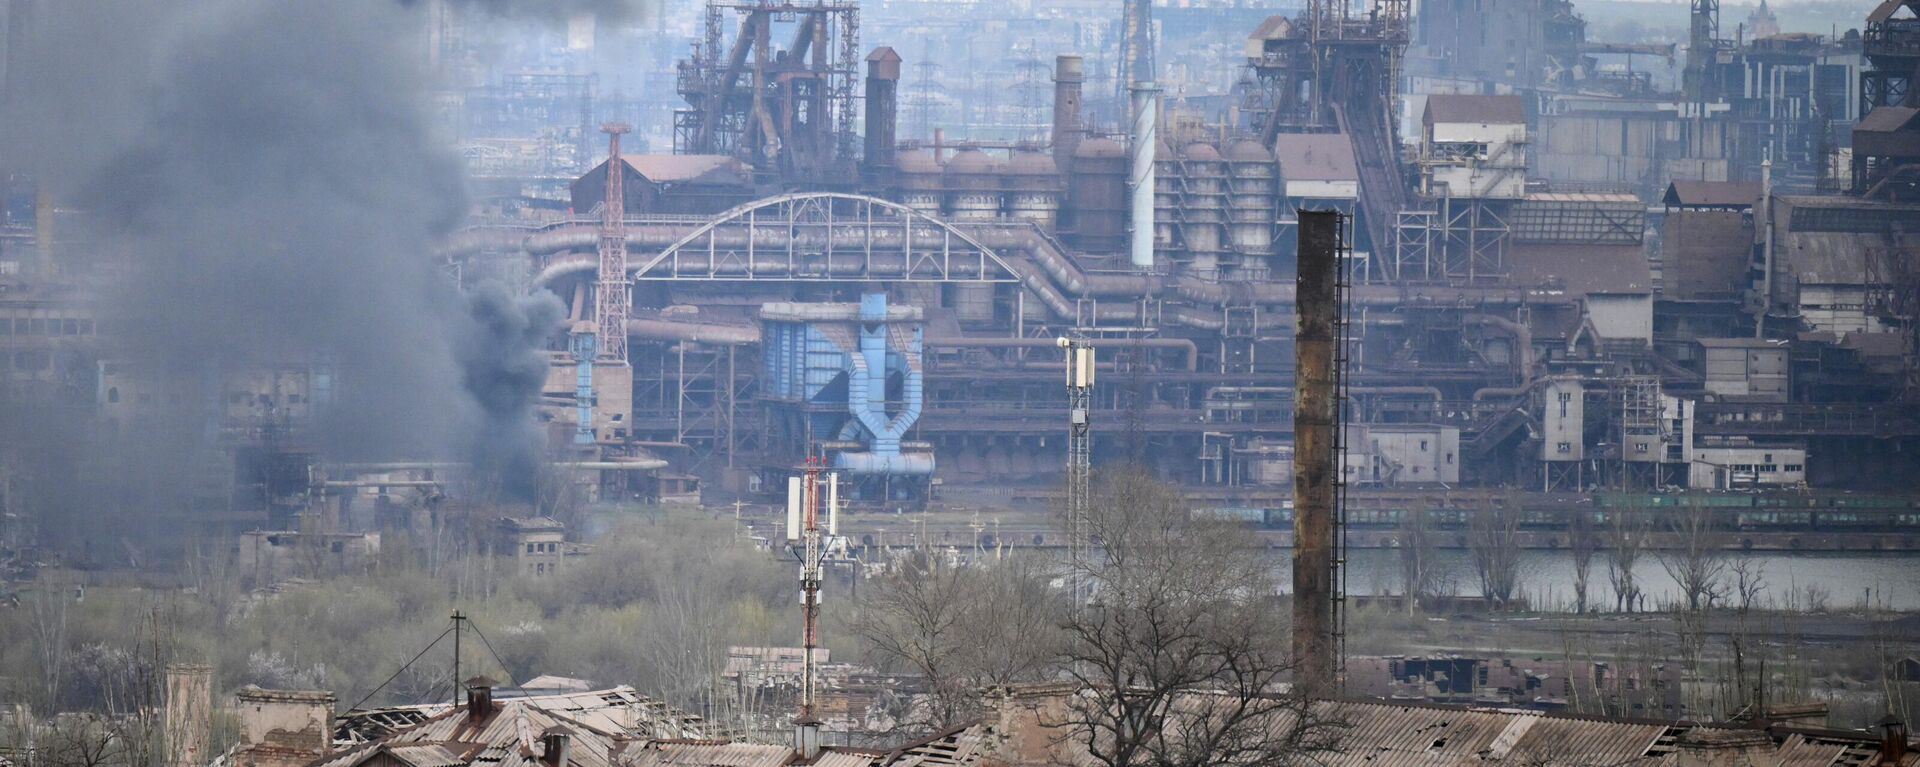 La planta de Azovstal en la ciudad ucraniana de Mariúpol - Sputnik Mundo, 1920, 04.05.2022